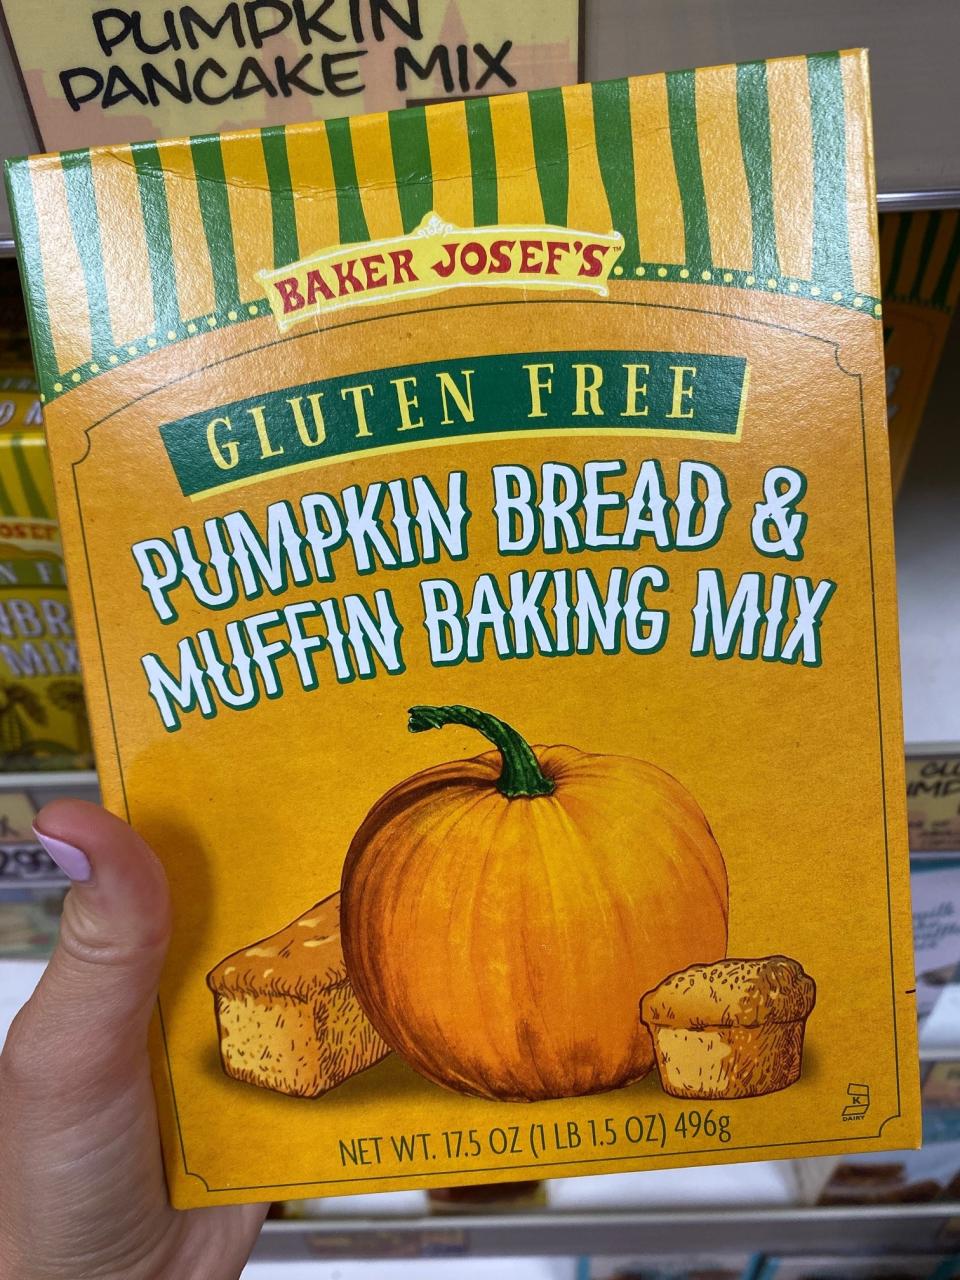 Gluten-Free Pumpkin Bread & Muffin Baking Mix